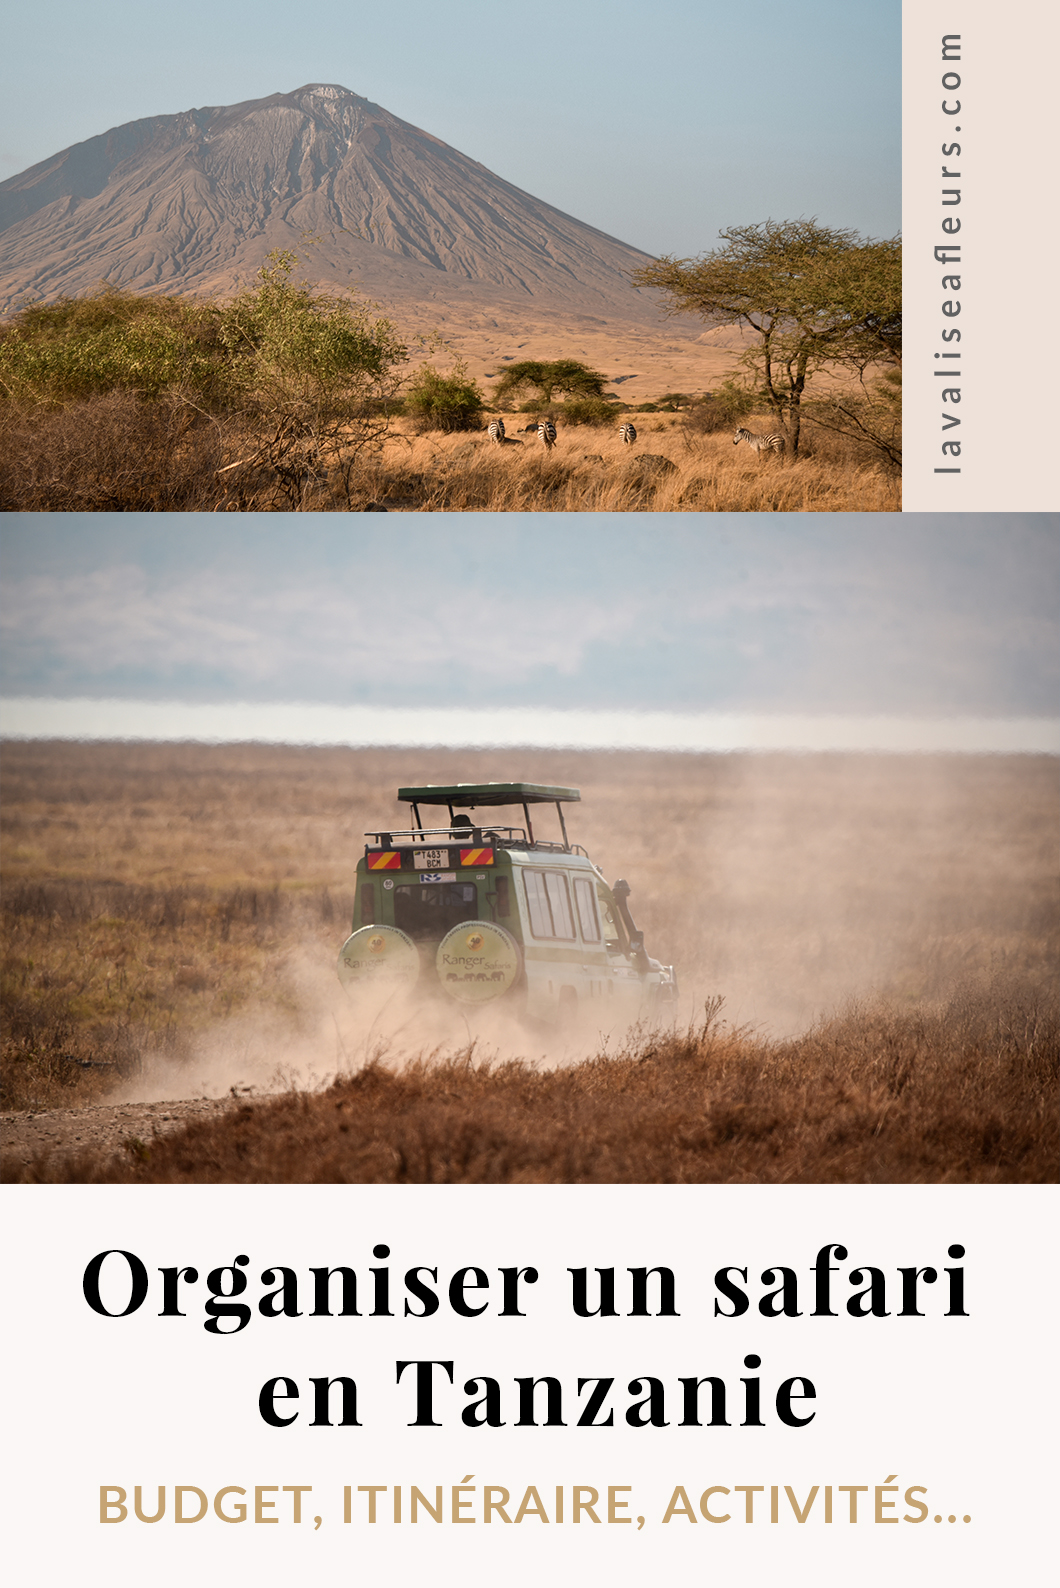 Organiser un safari en Tanzanie - budget, itinéraire et programme